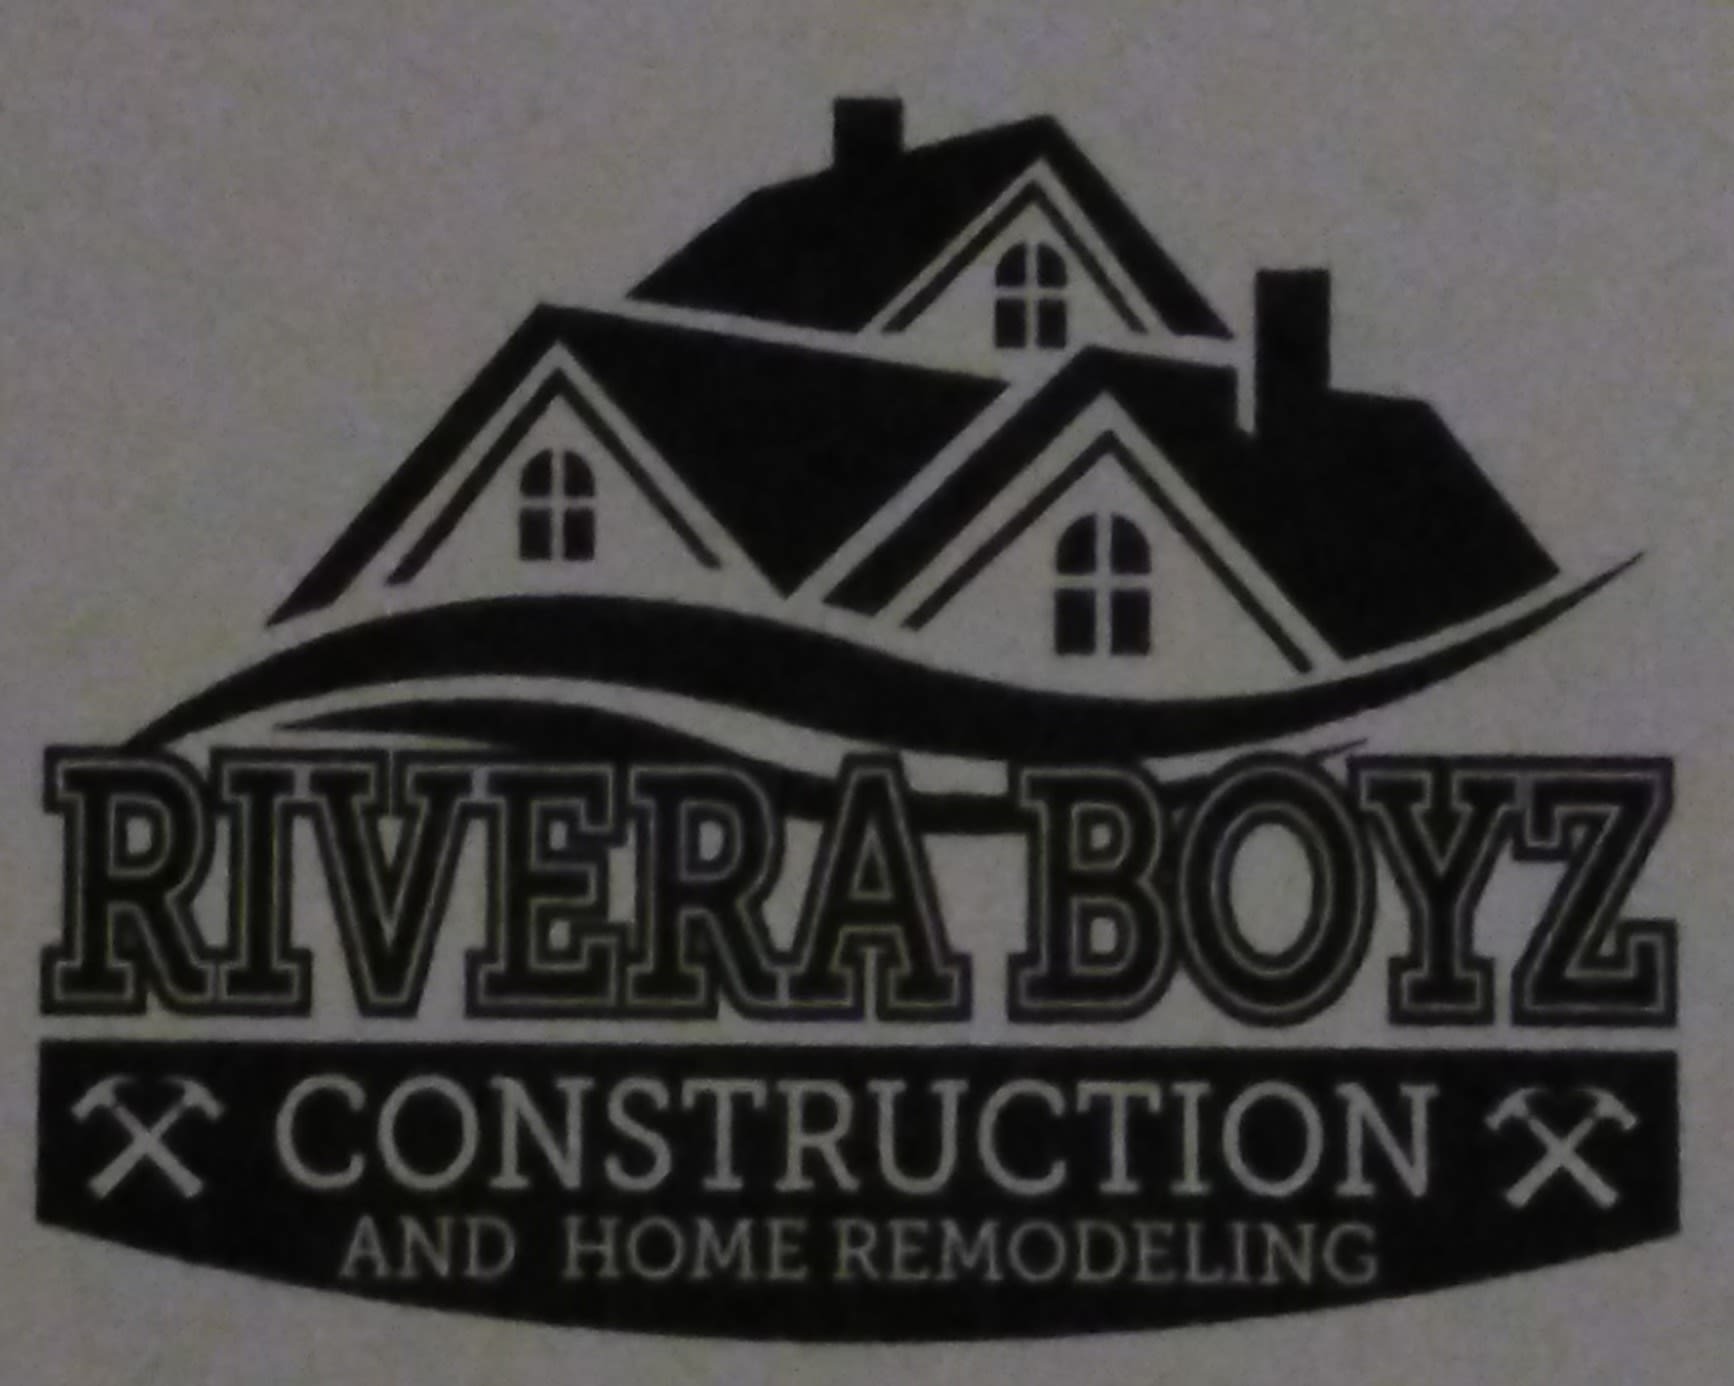 Rivera Boyz Construction